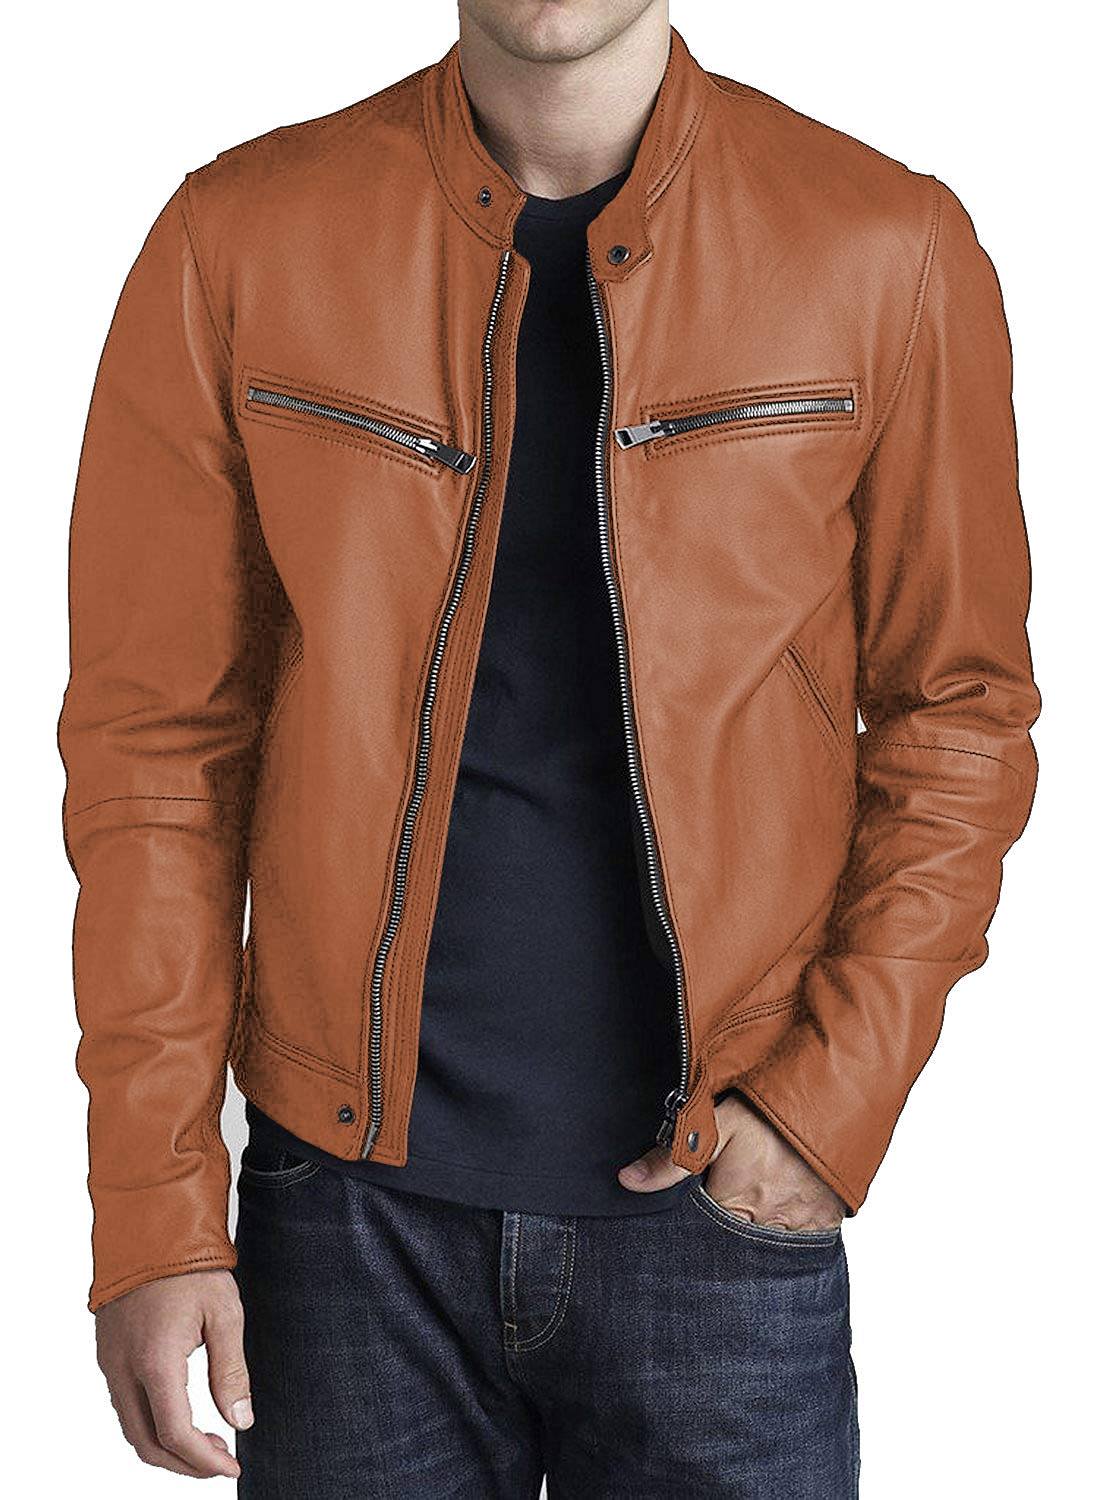 Leather Jackets Hub Mens Genuine Lambskin Leather Jacket (Black, Racer Jacket) - 1501316